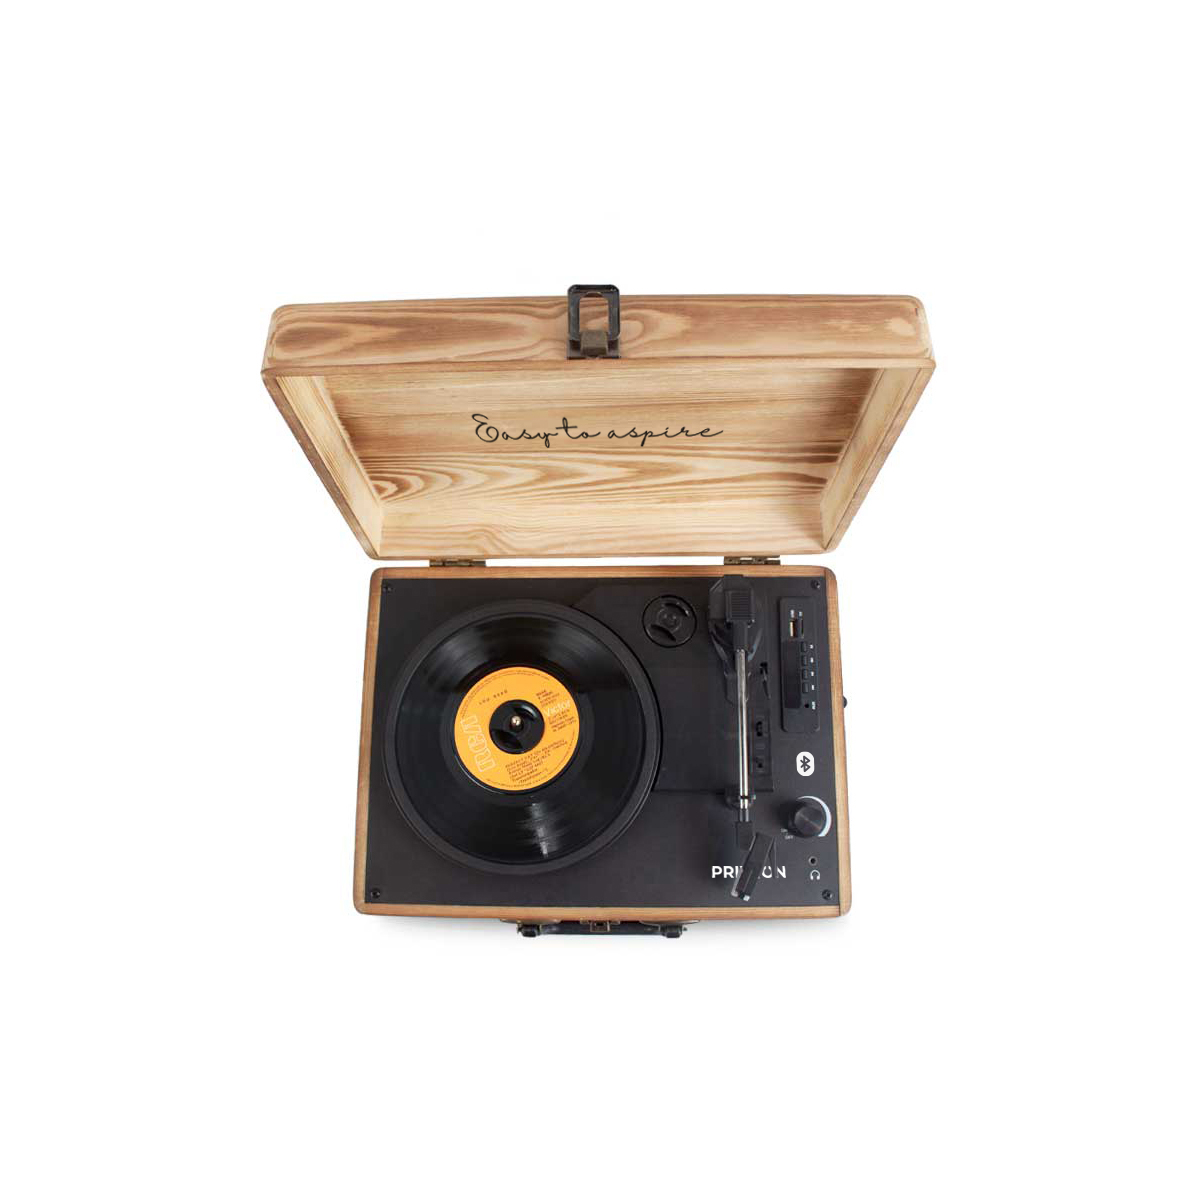 PRIXTON Marconi - Tocadiscos de Vinilo Vintage, Reproductor de Vinilo y  Reproductor de Musica Mediante Bluetooth, USB